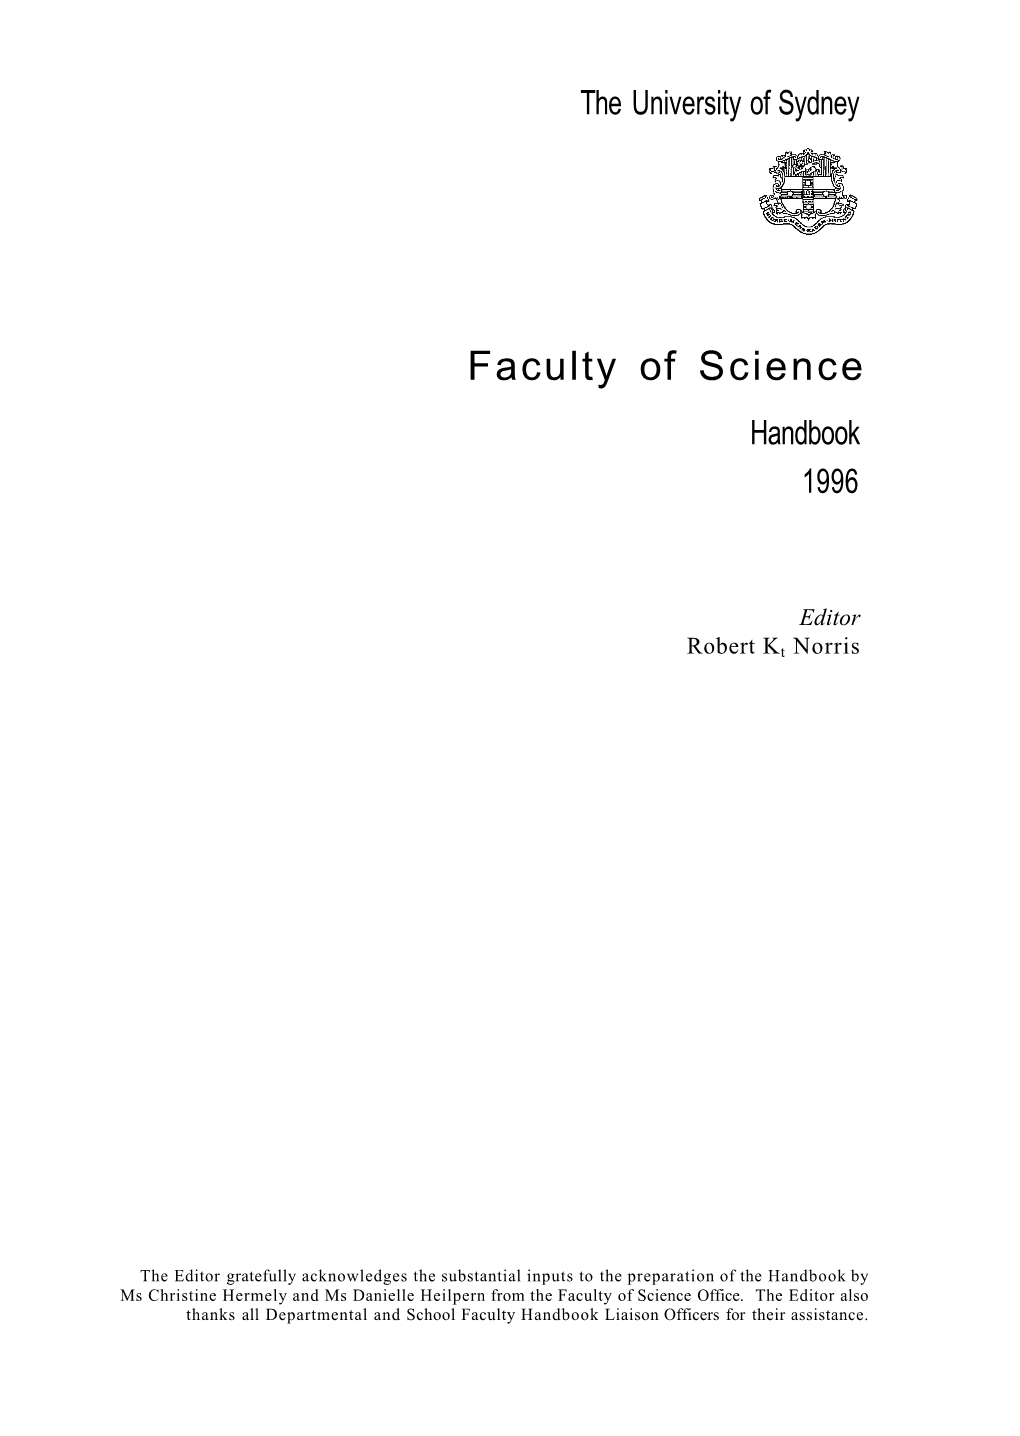 Faculty of Science Handbook 1996